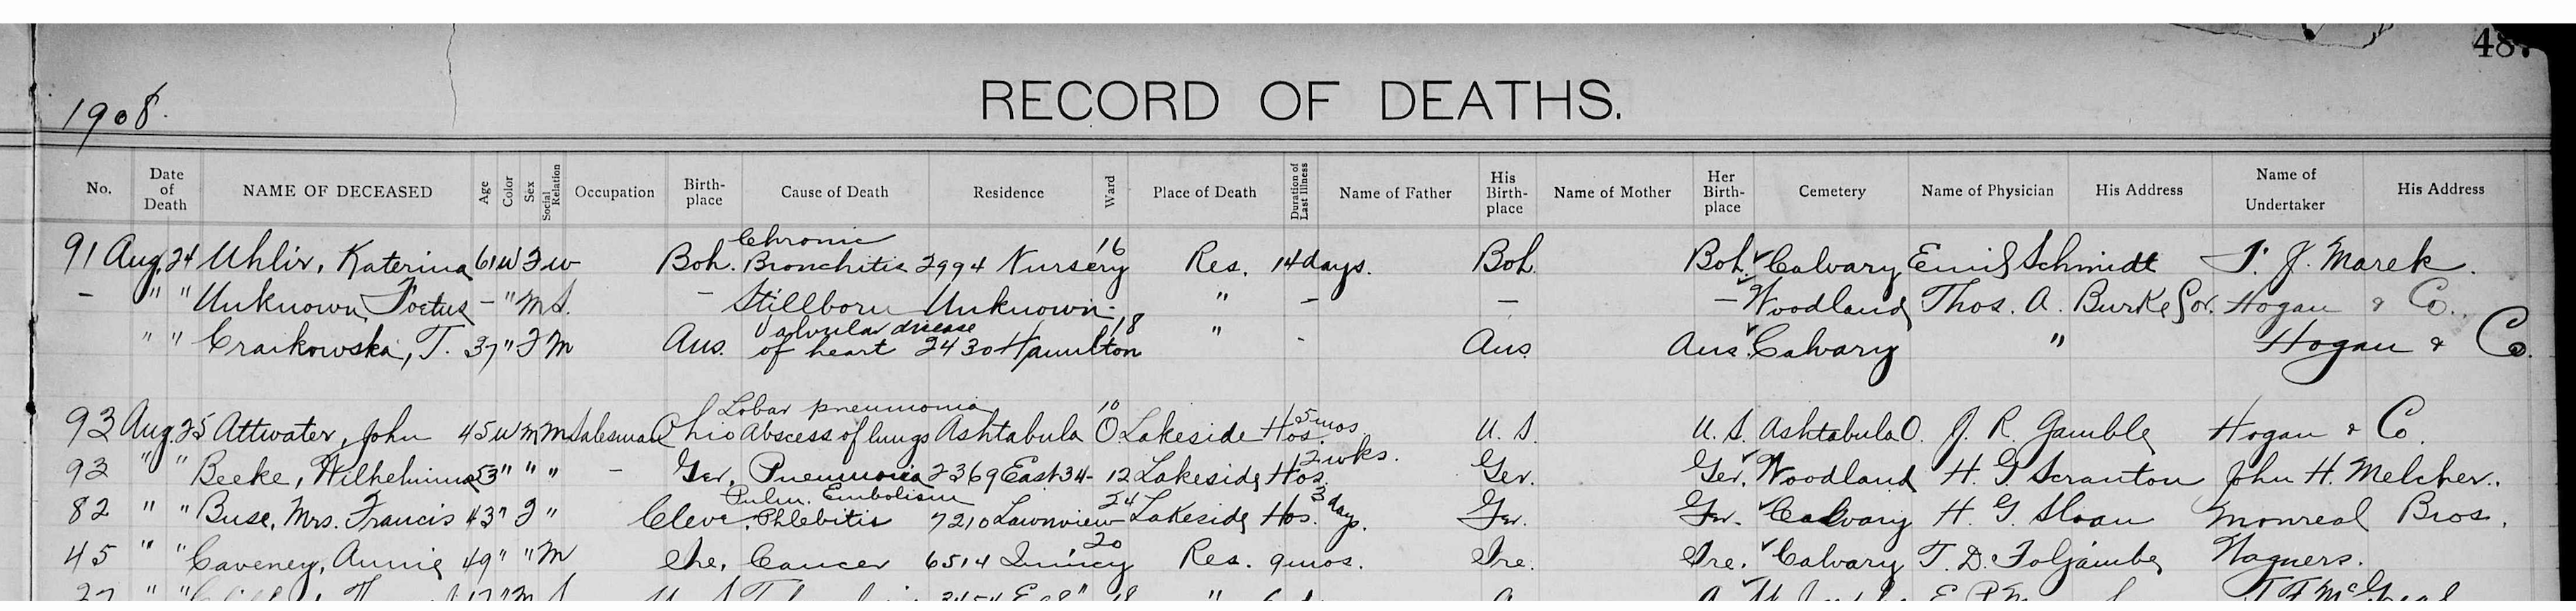 Anna Salmon Caveney death record